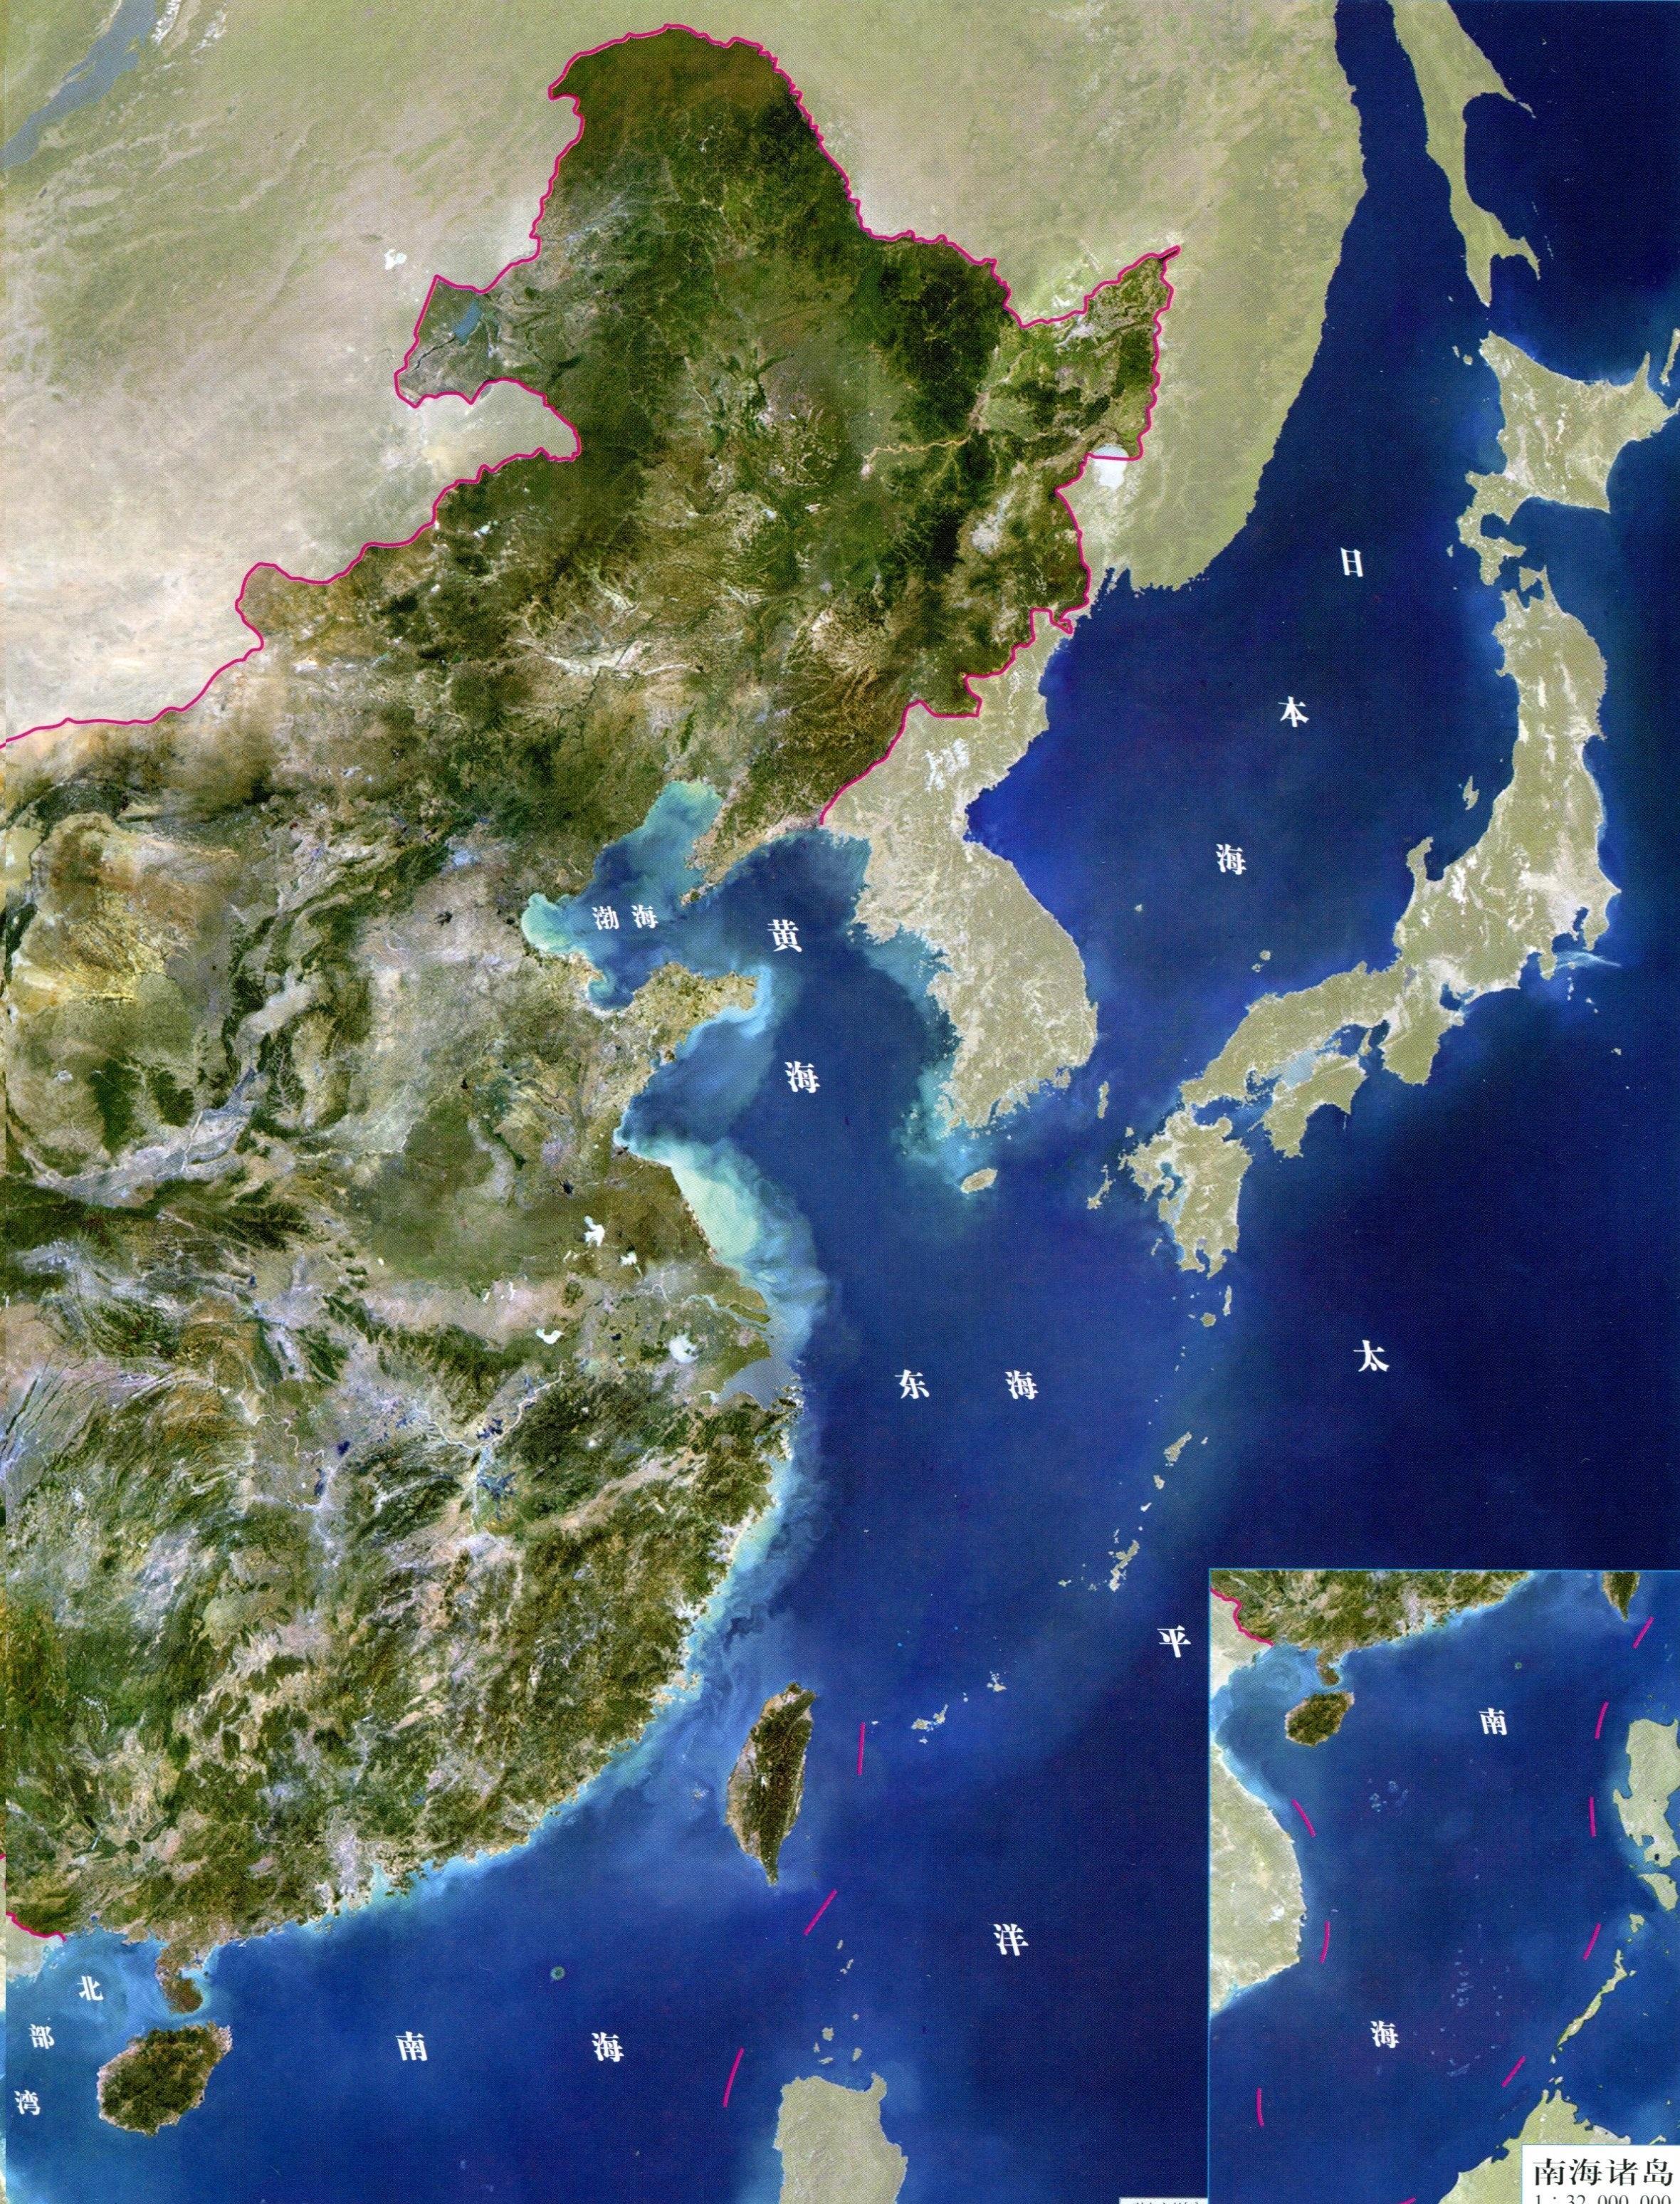 bing卫星地图图片